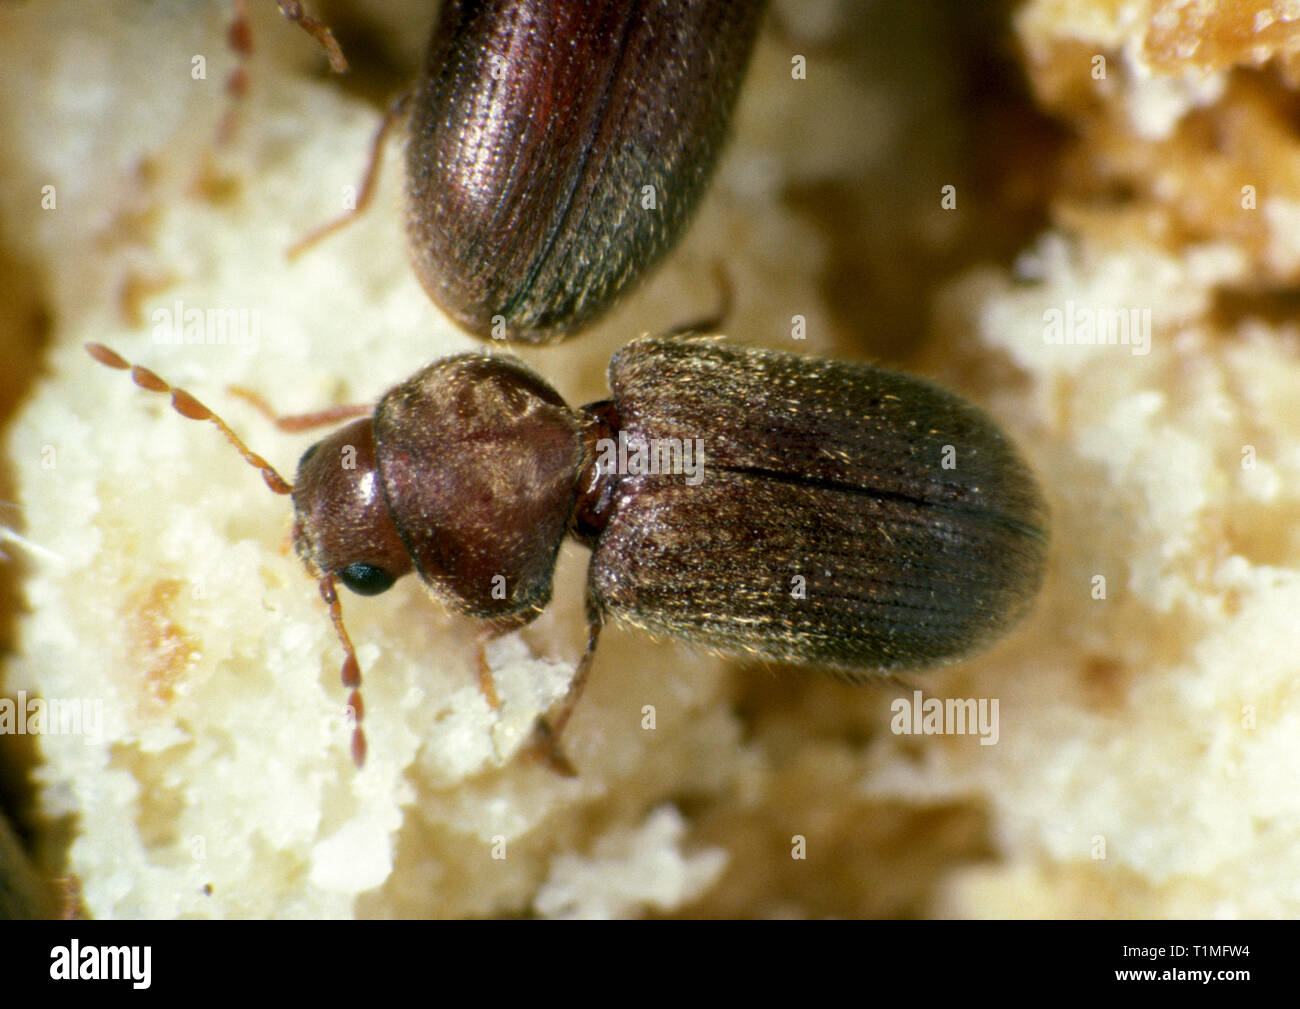 Biscuit, drugstore or bread beetle (Stegobium paniceum) adult stored product pest on grain debris Stock Photo